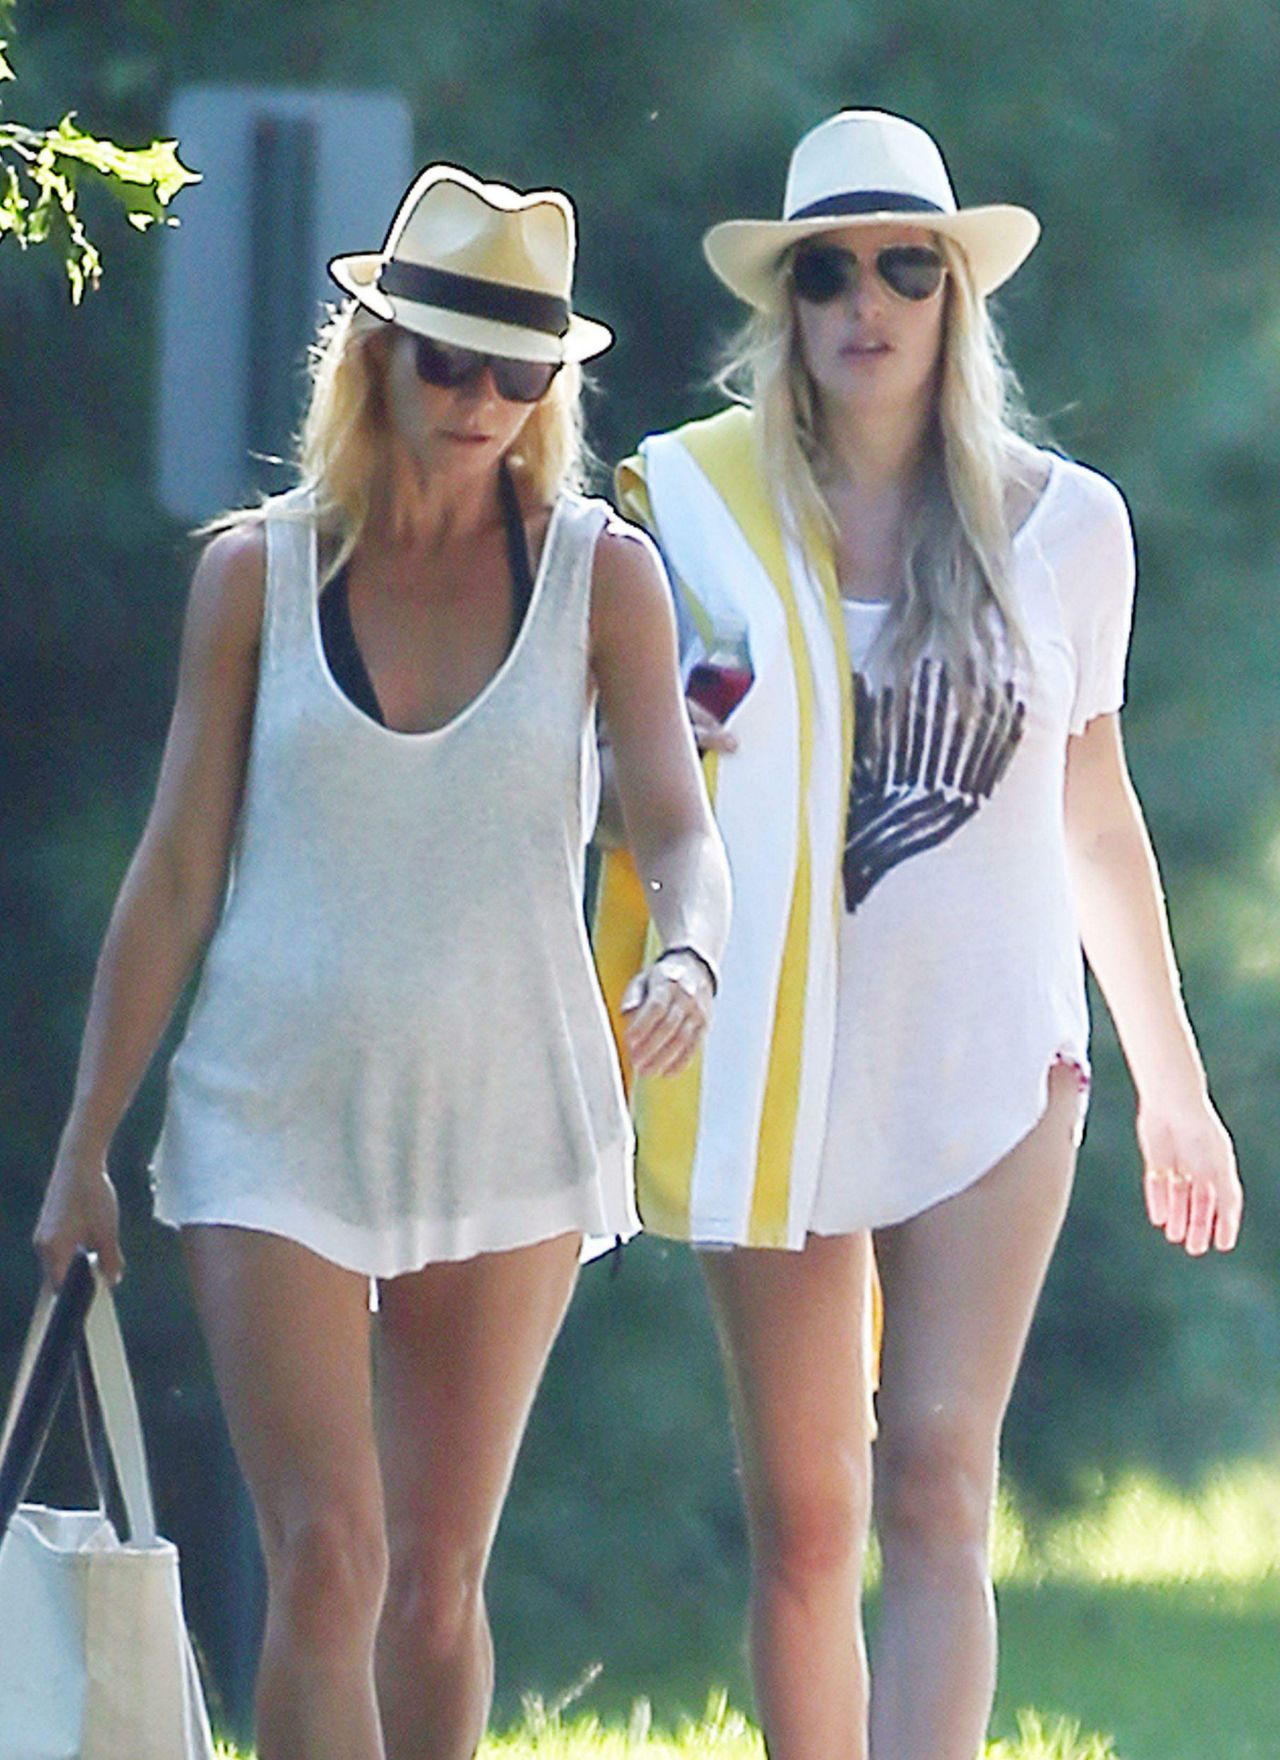 Gwyneth Paltrow and Friends Take a Stroll in East Hampton - August 2014